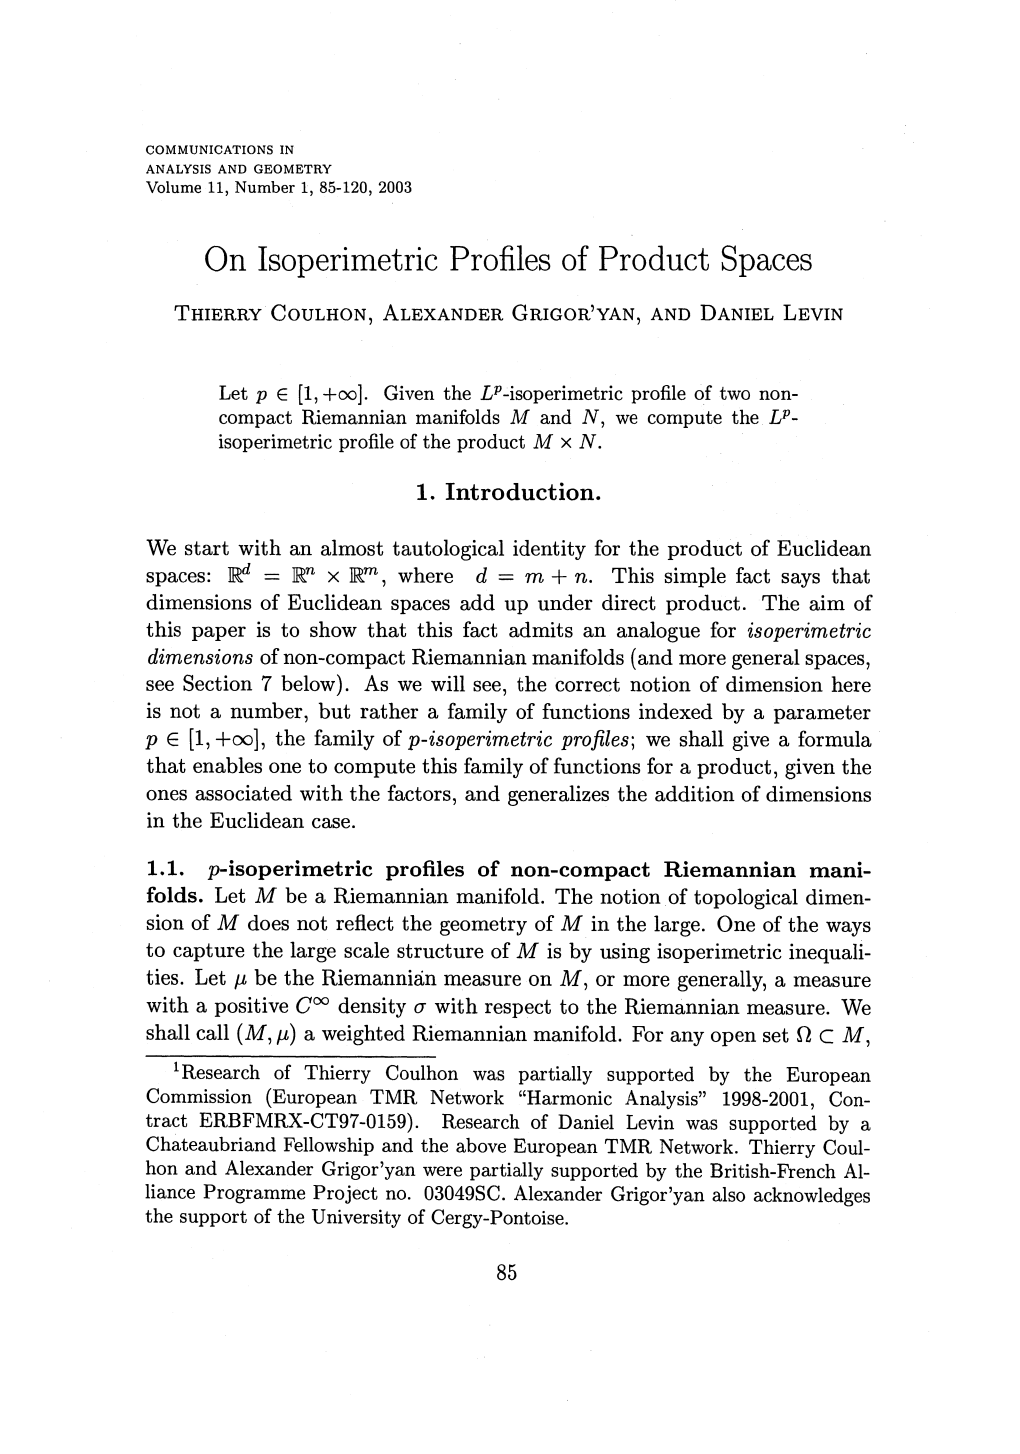 On Isoperimetric Profiles of Product Spaces